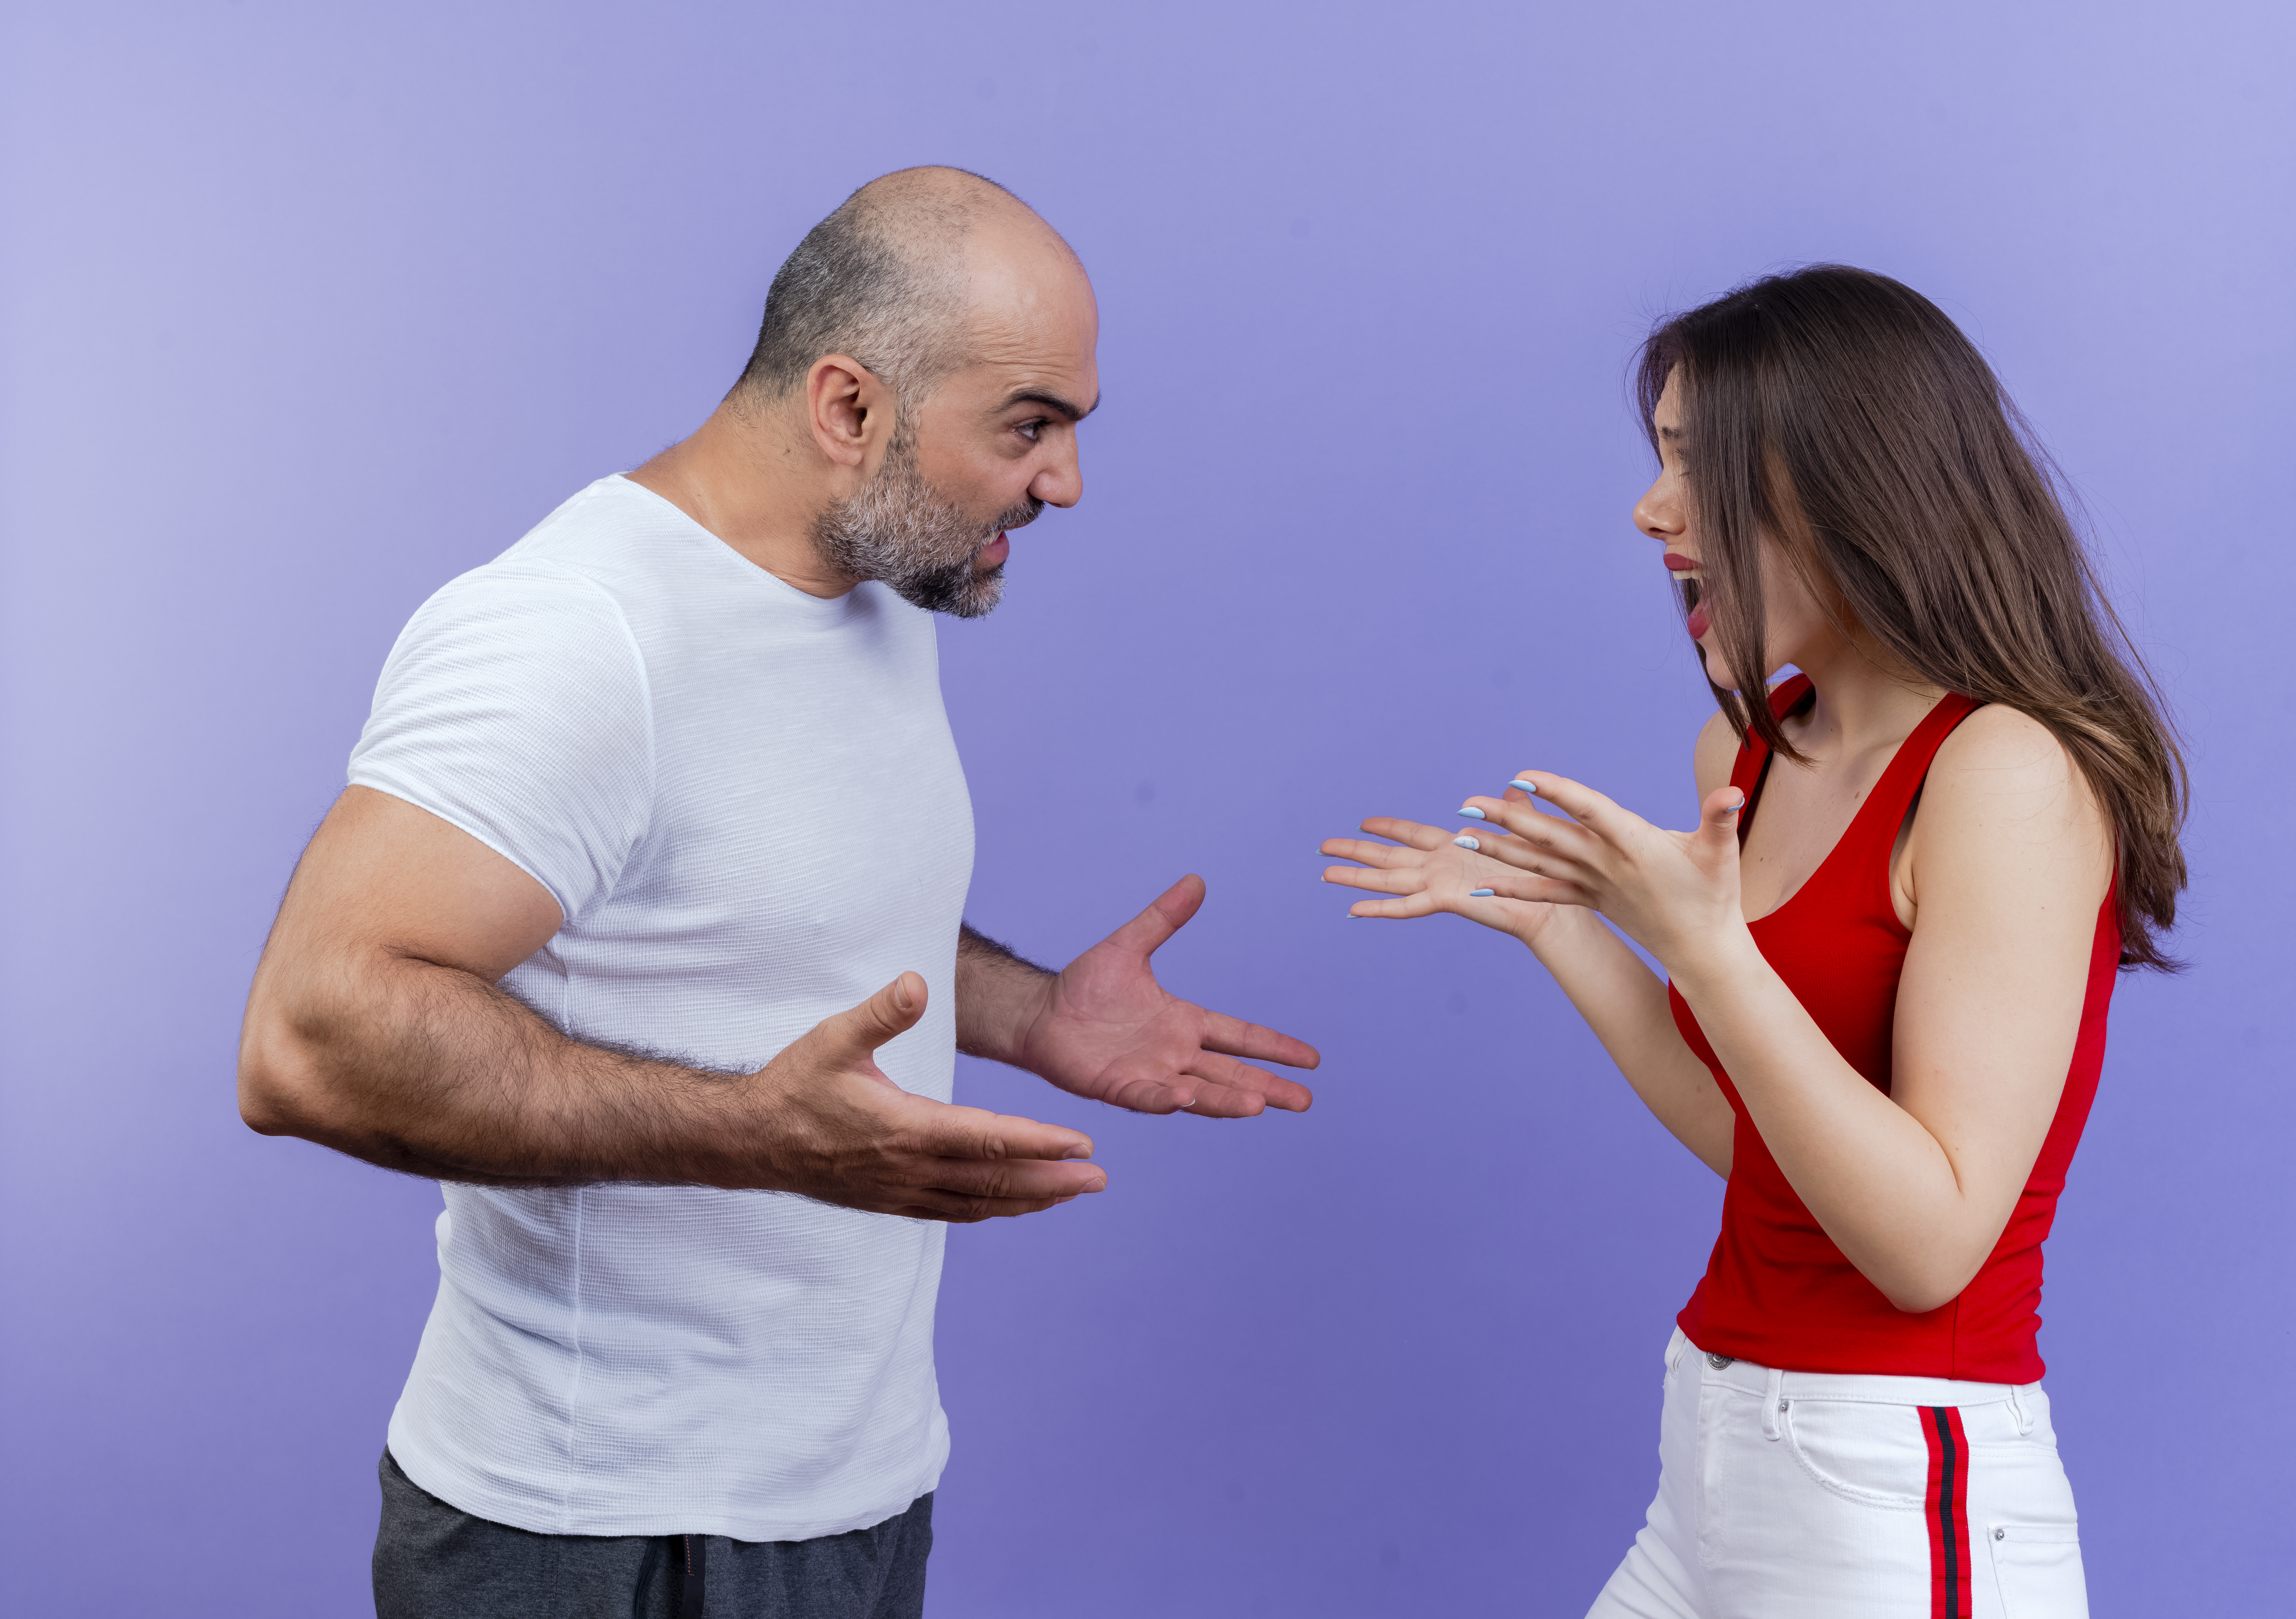 Homme et femme en train de se disputer | Source : stockking on Freepik